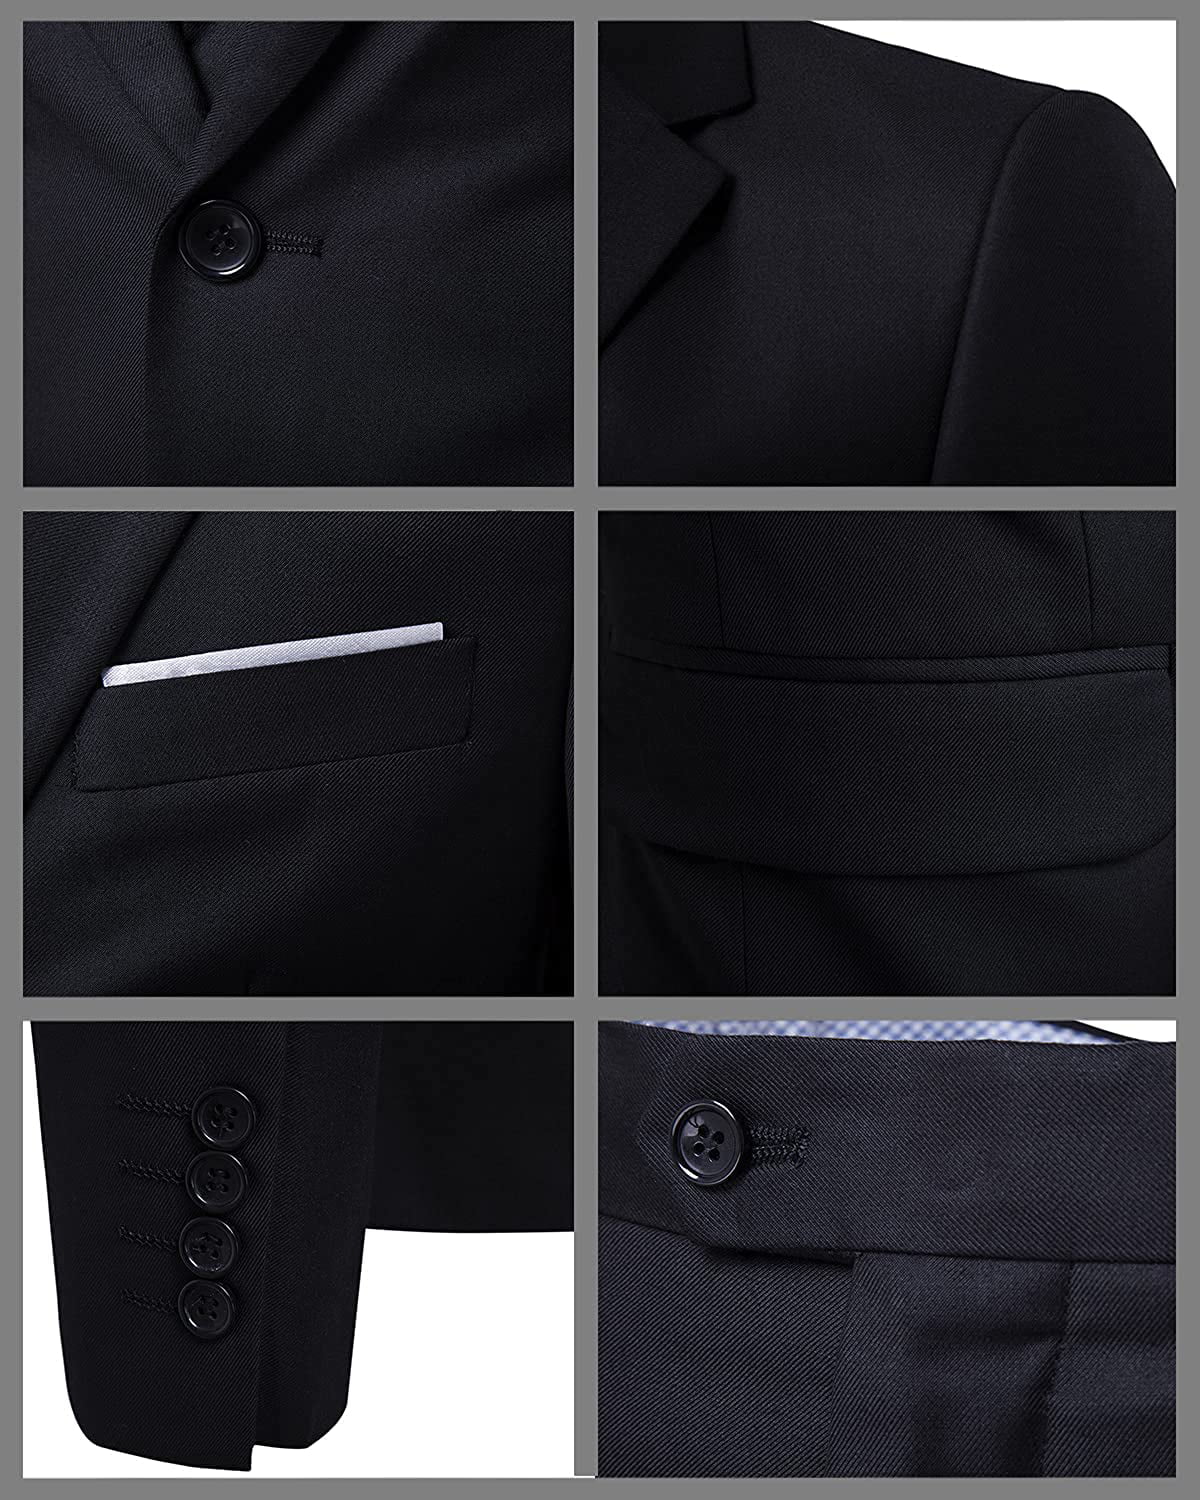 MAGE MALE Mens 3 Pieces Suit Elegant Solid One Button Slim Fit Single Breasted Party Blazer Vest Pants Set